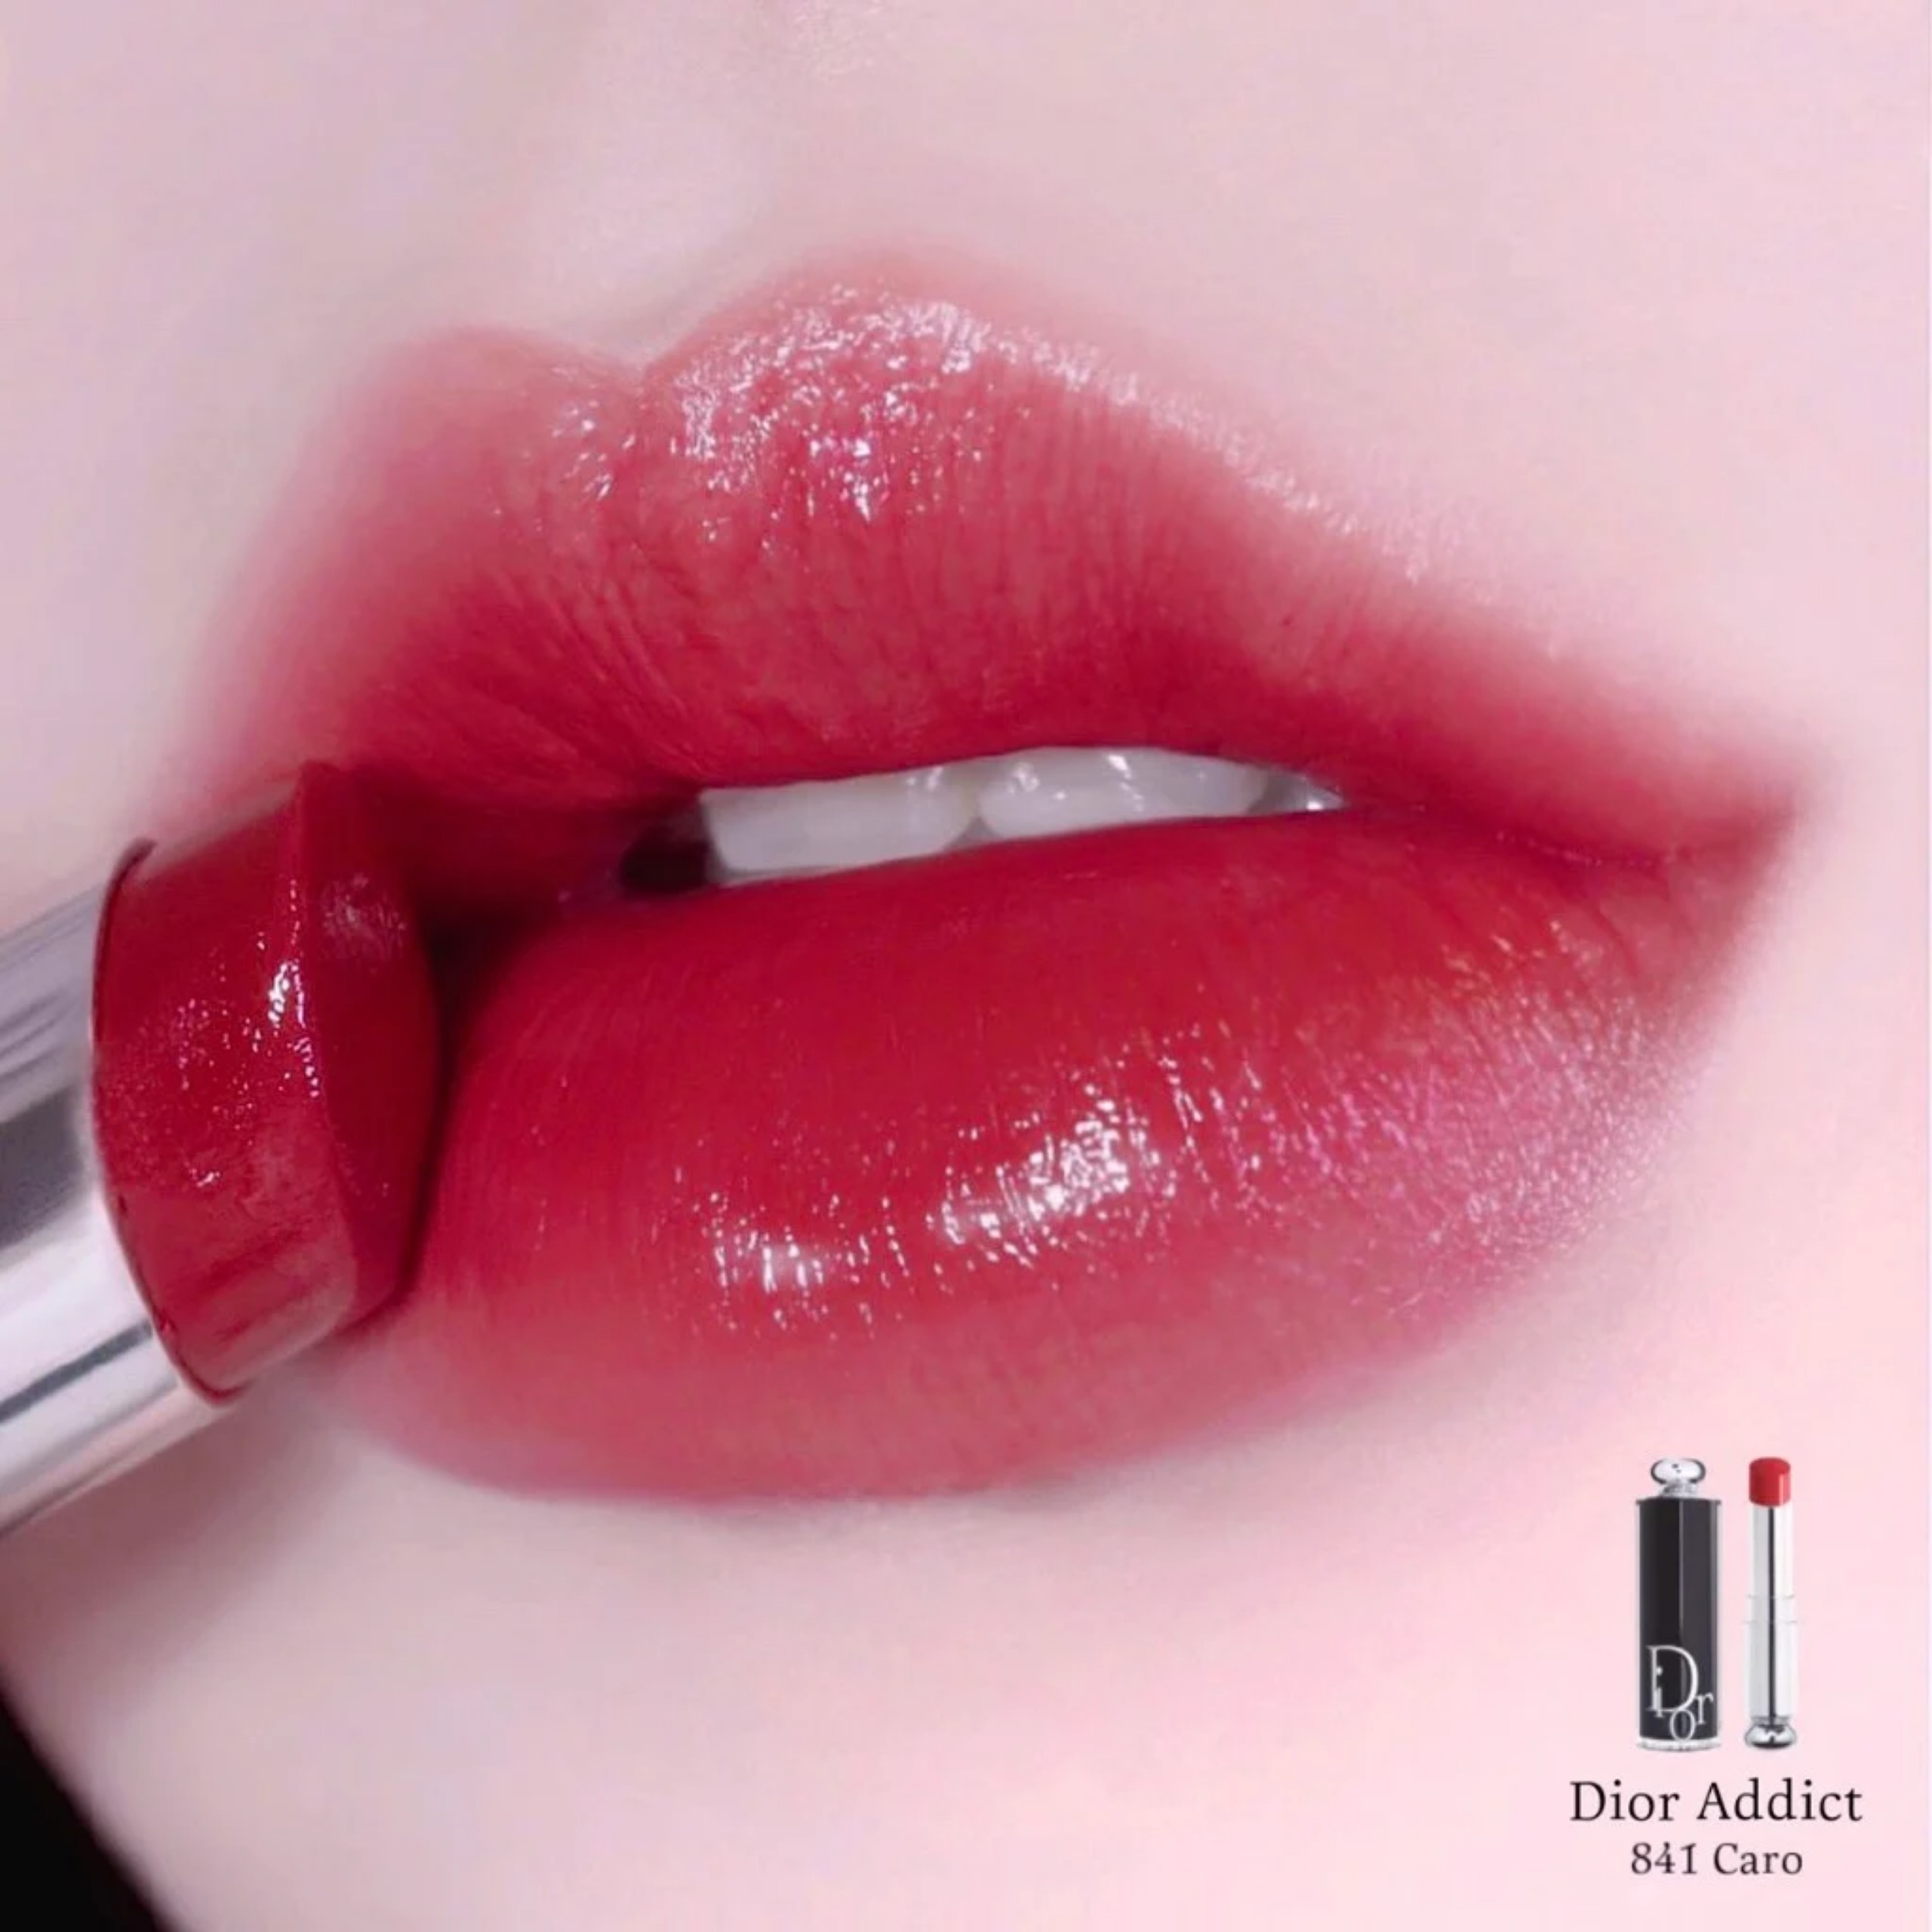 Son Dưỡng Dior Collagen Addict Lip Maximizer  Kiều Lam